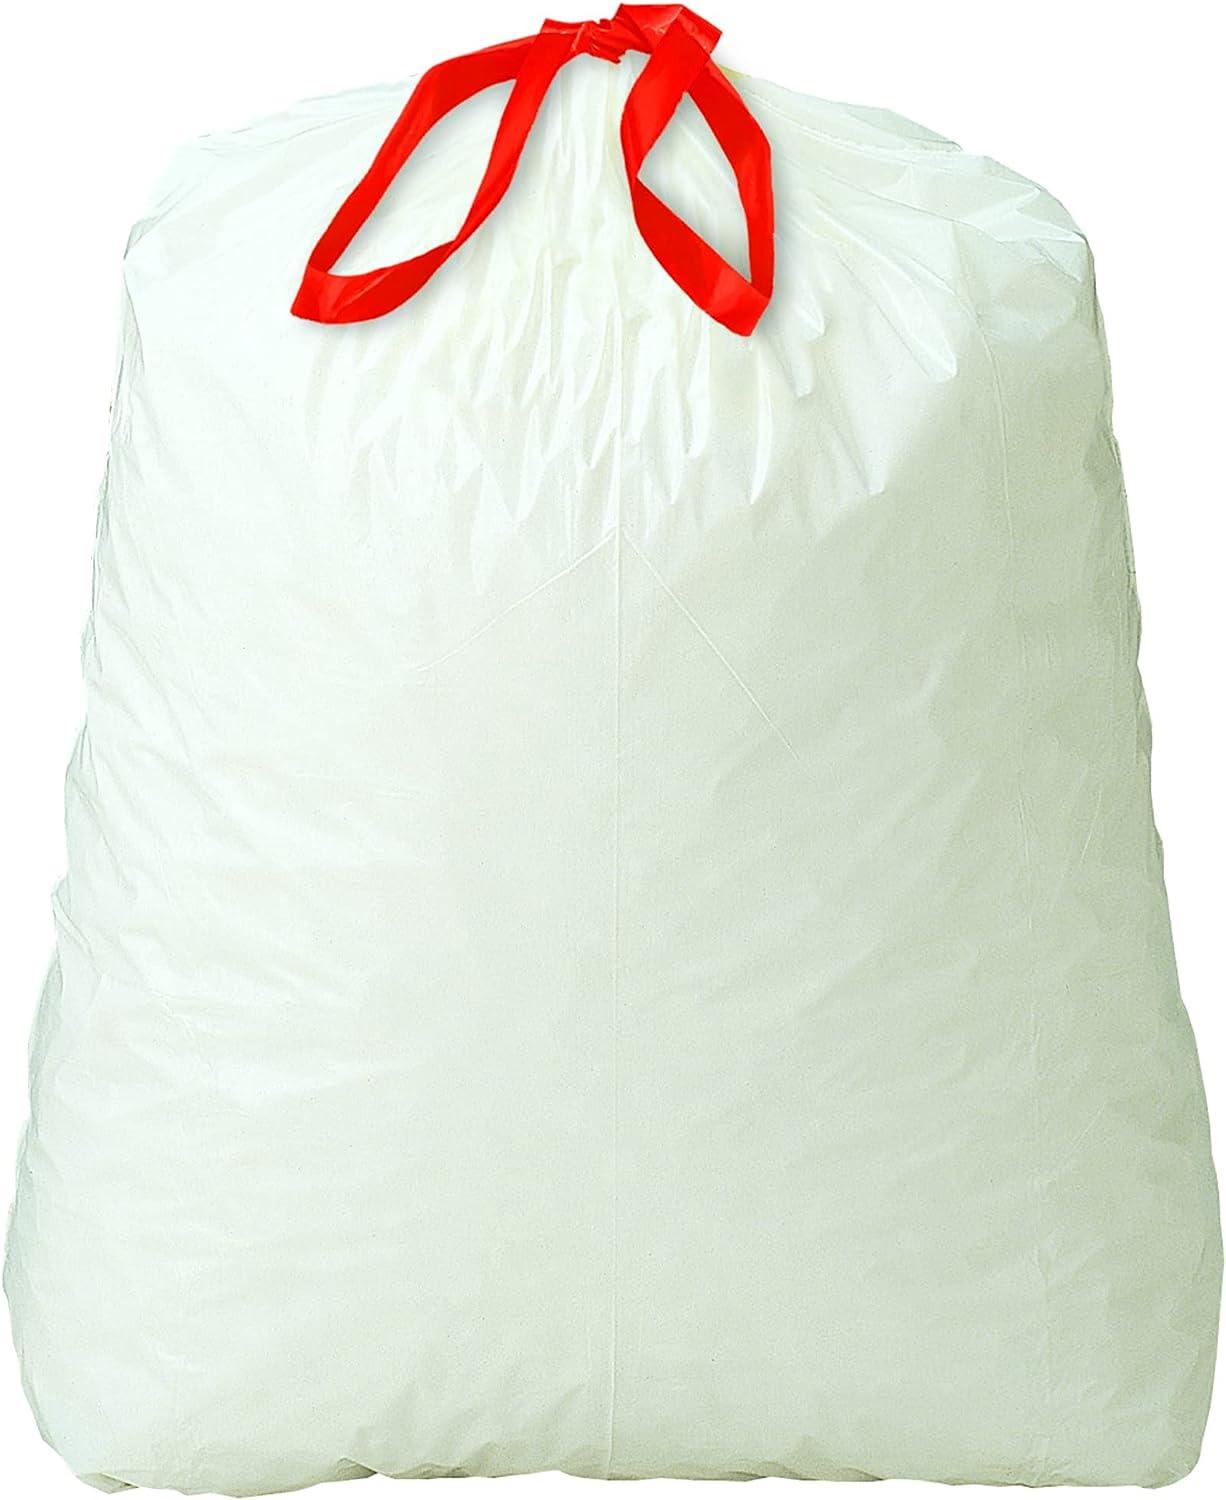 30 bolsas de basura con cordón para cocina, color blanco, sin